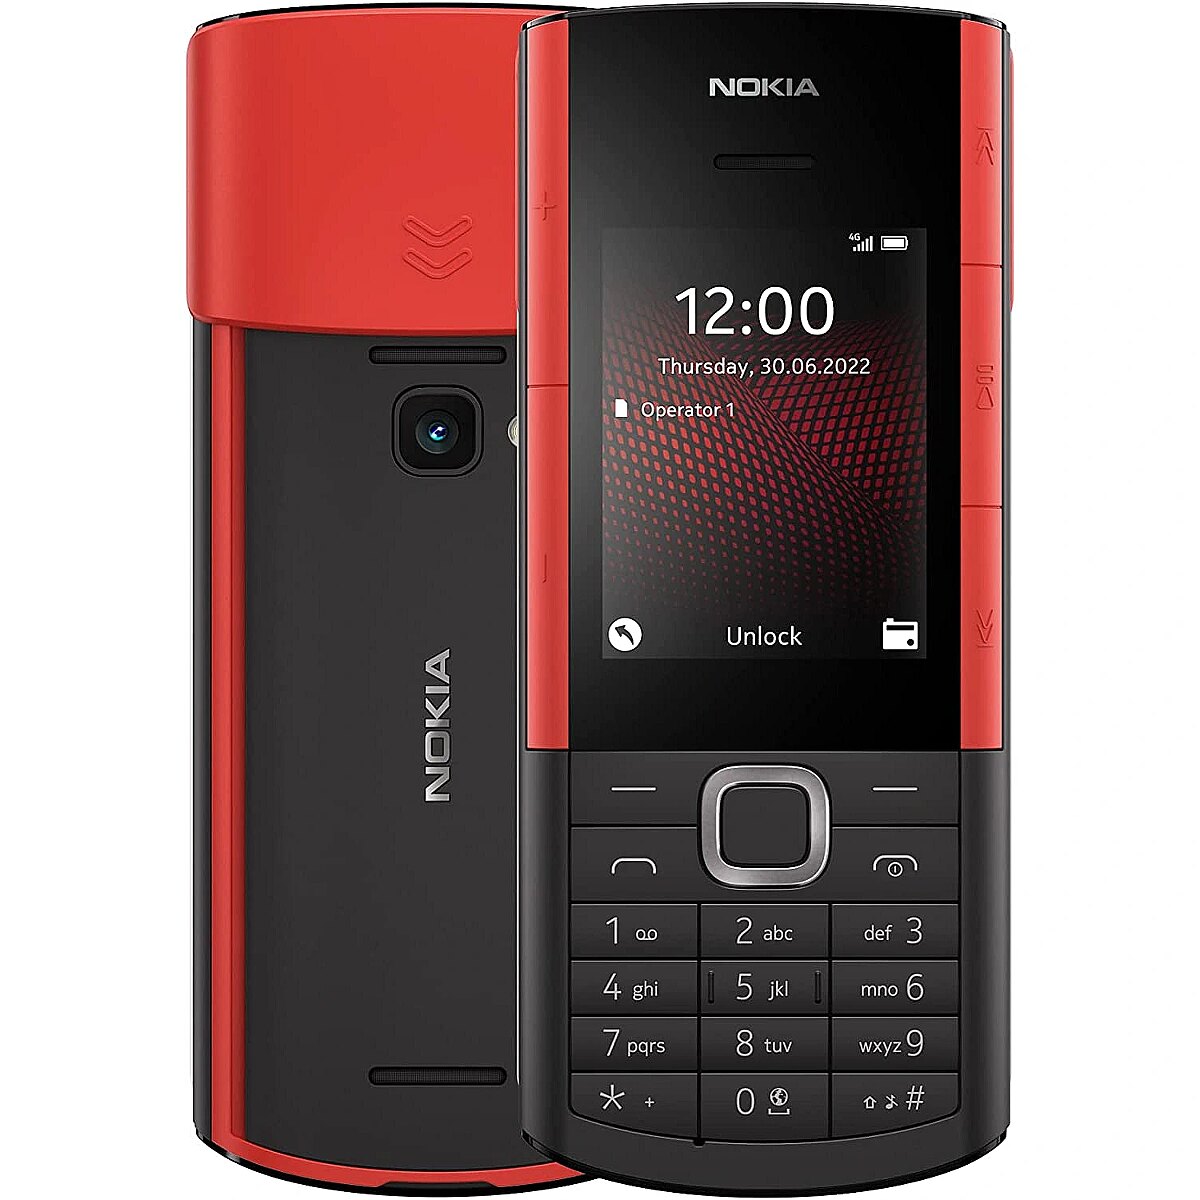 5710 xpress audio. Nokia 5710. Нокиа Xpress Audio. Nokia 5710 XPRESSMUSIC. Нокиа 5710 XPRESSMUSIC 2022.